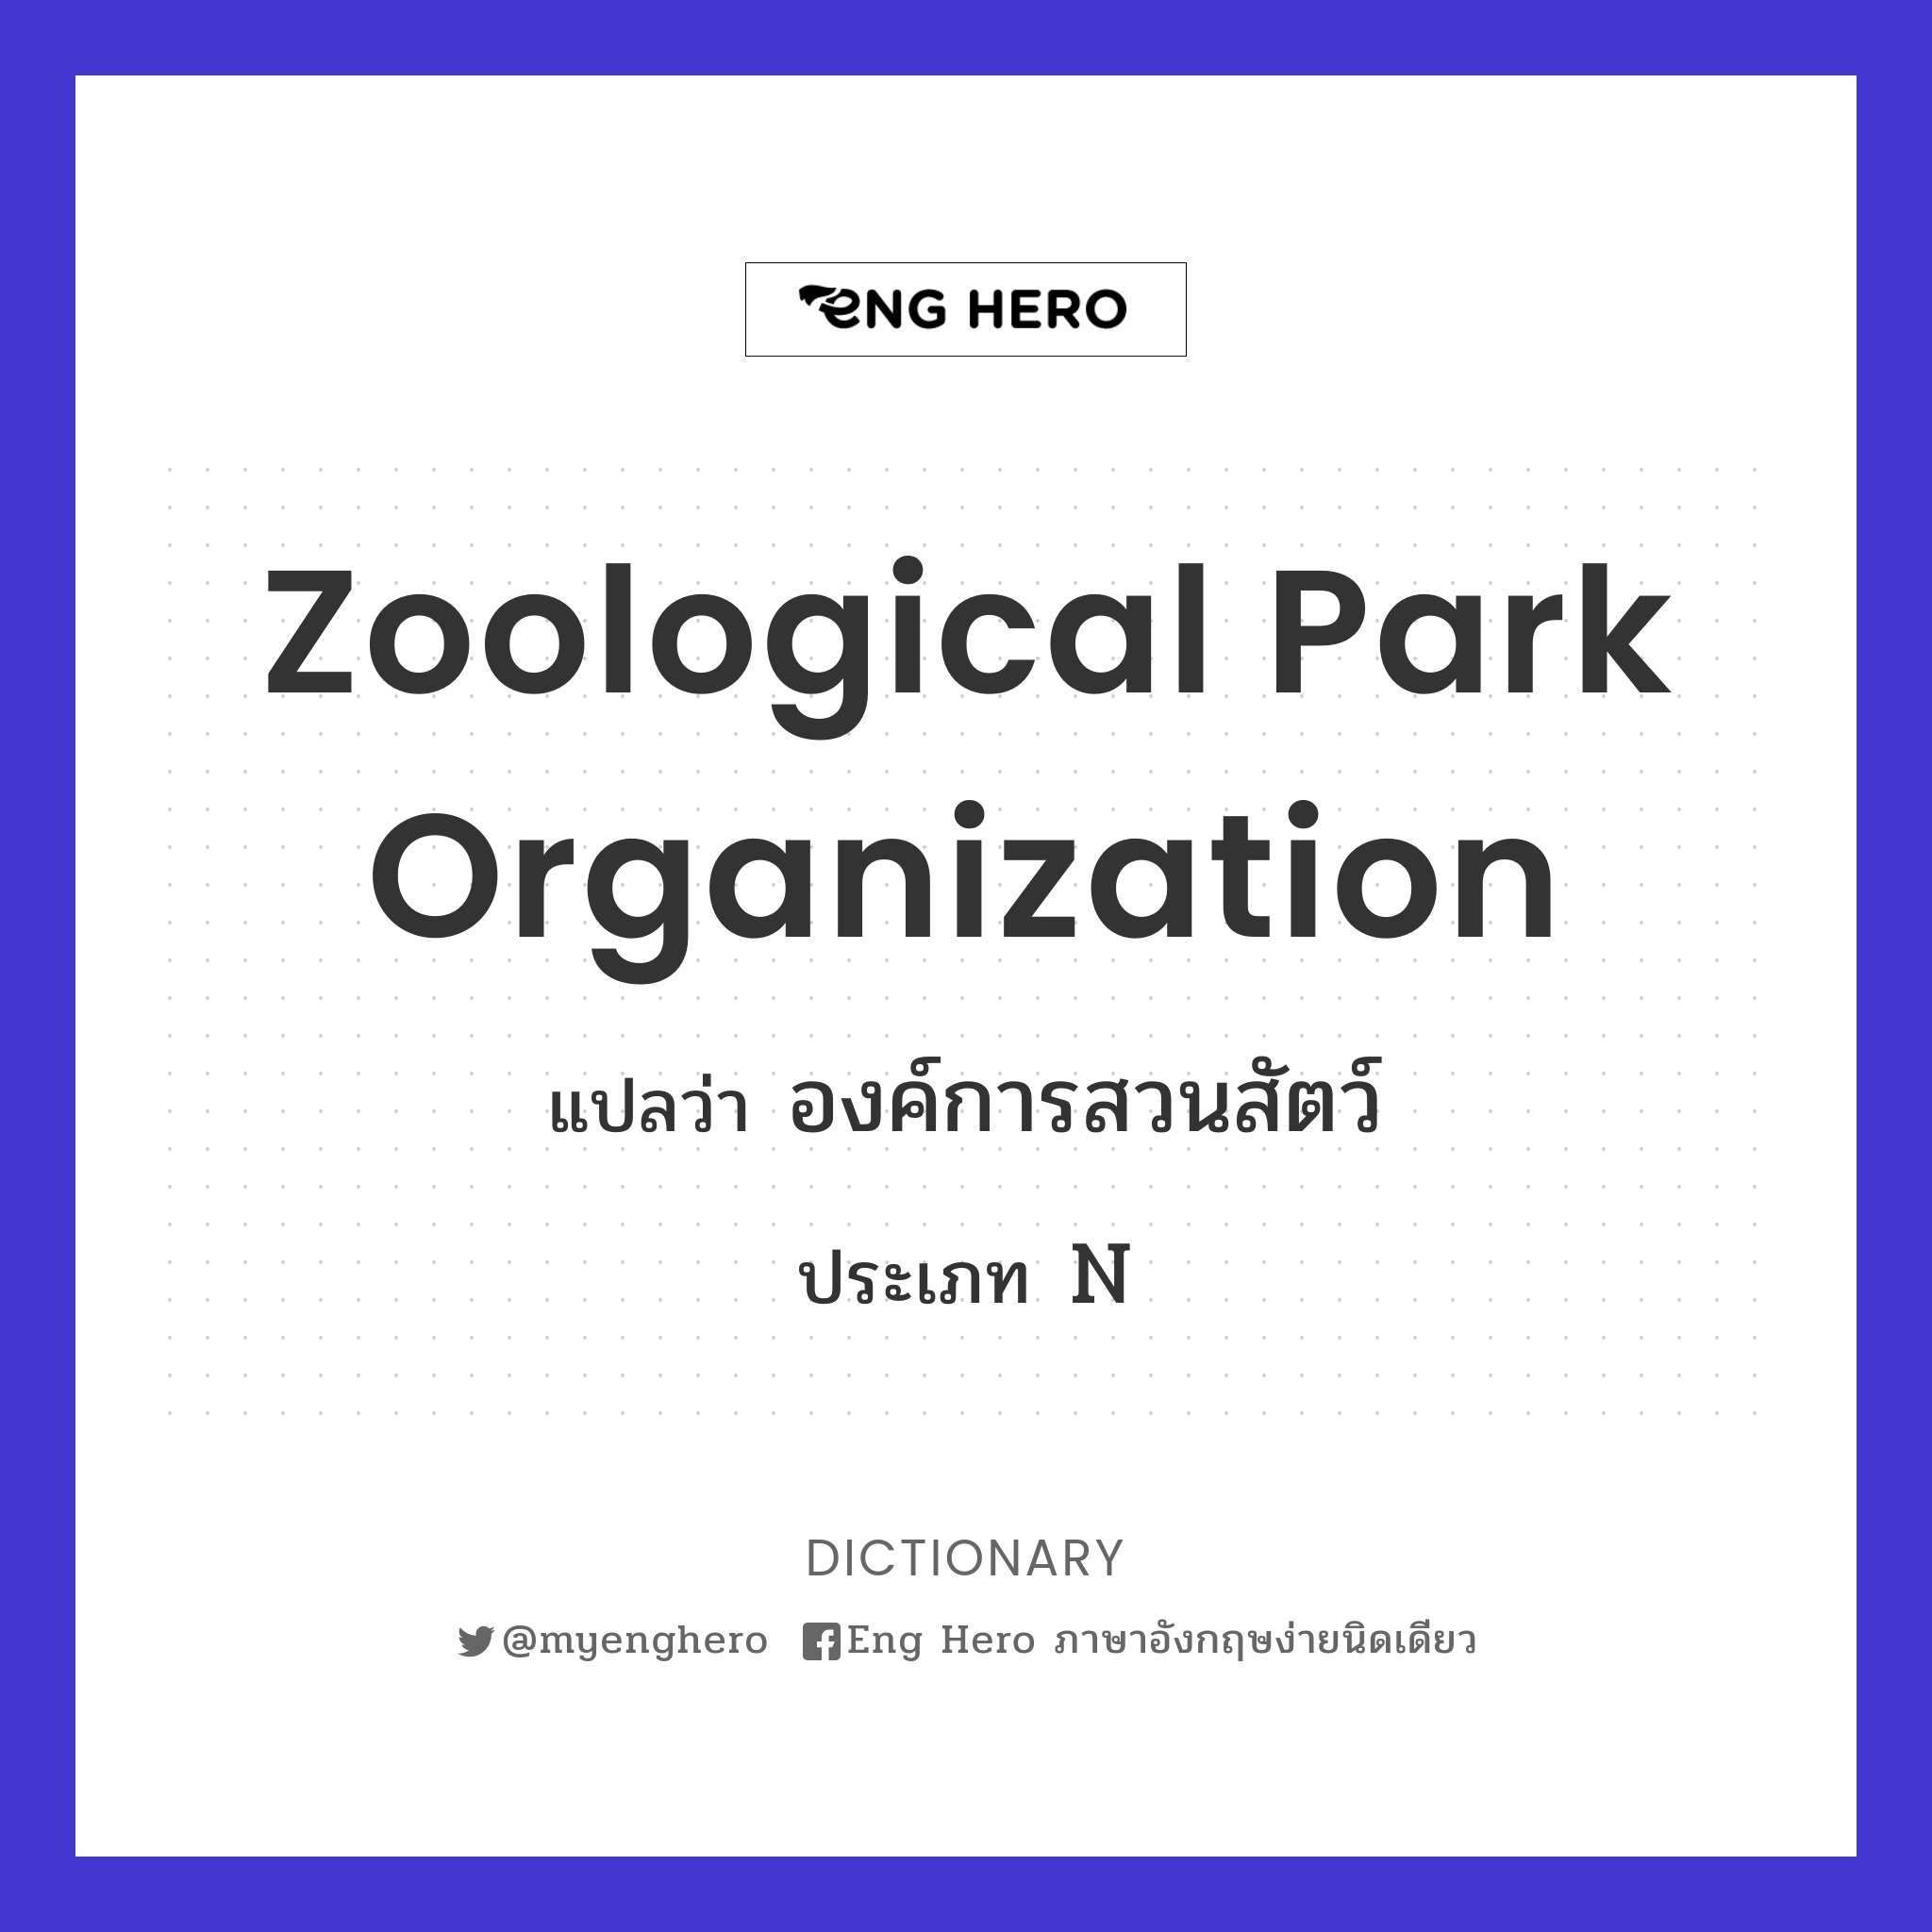 Zoological Park Organization